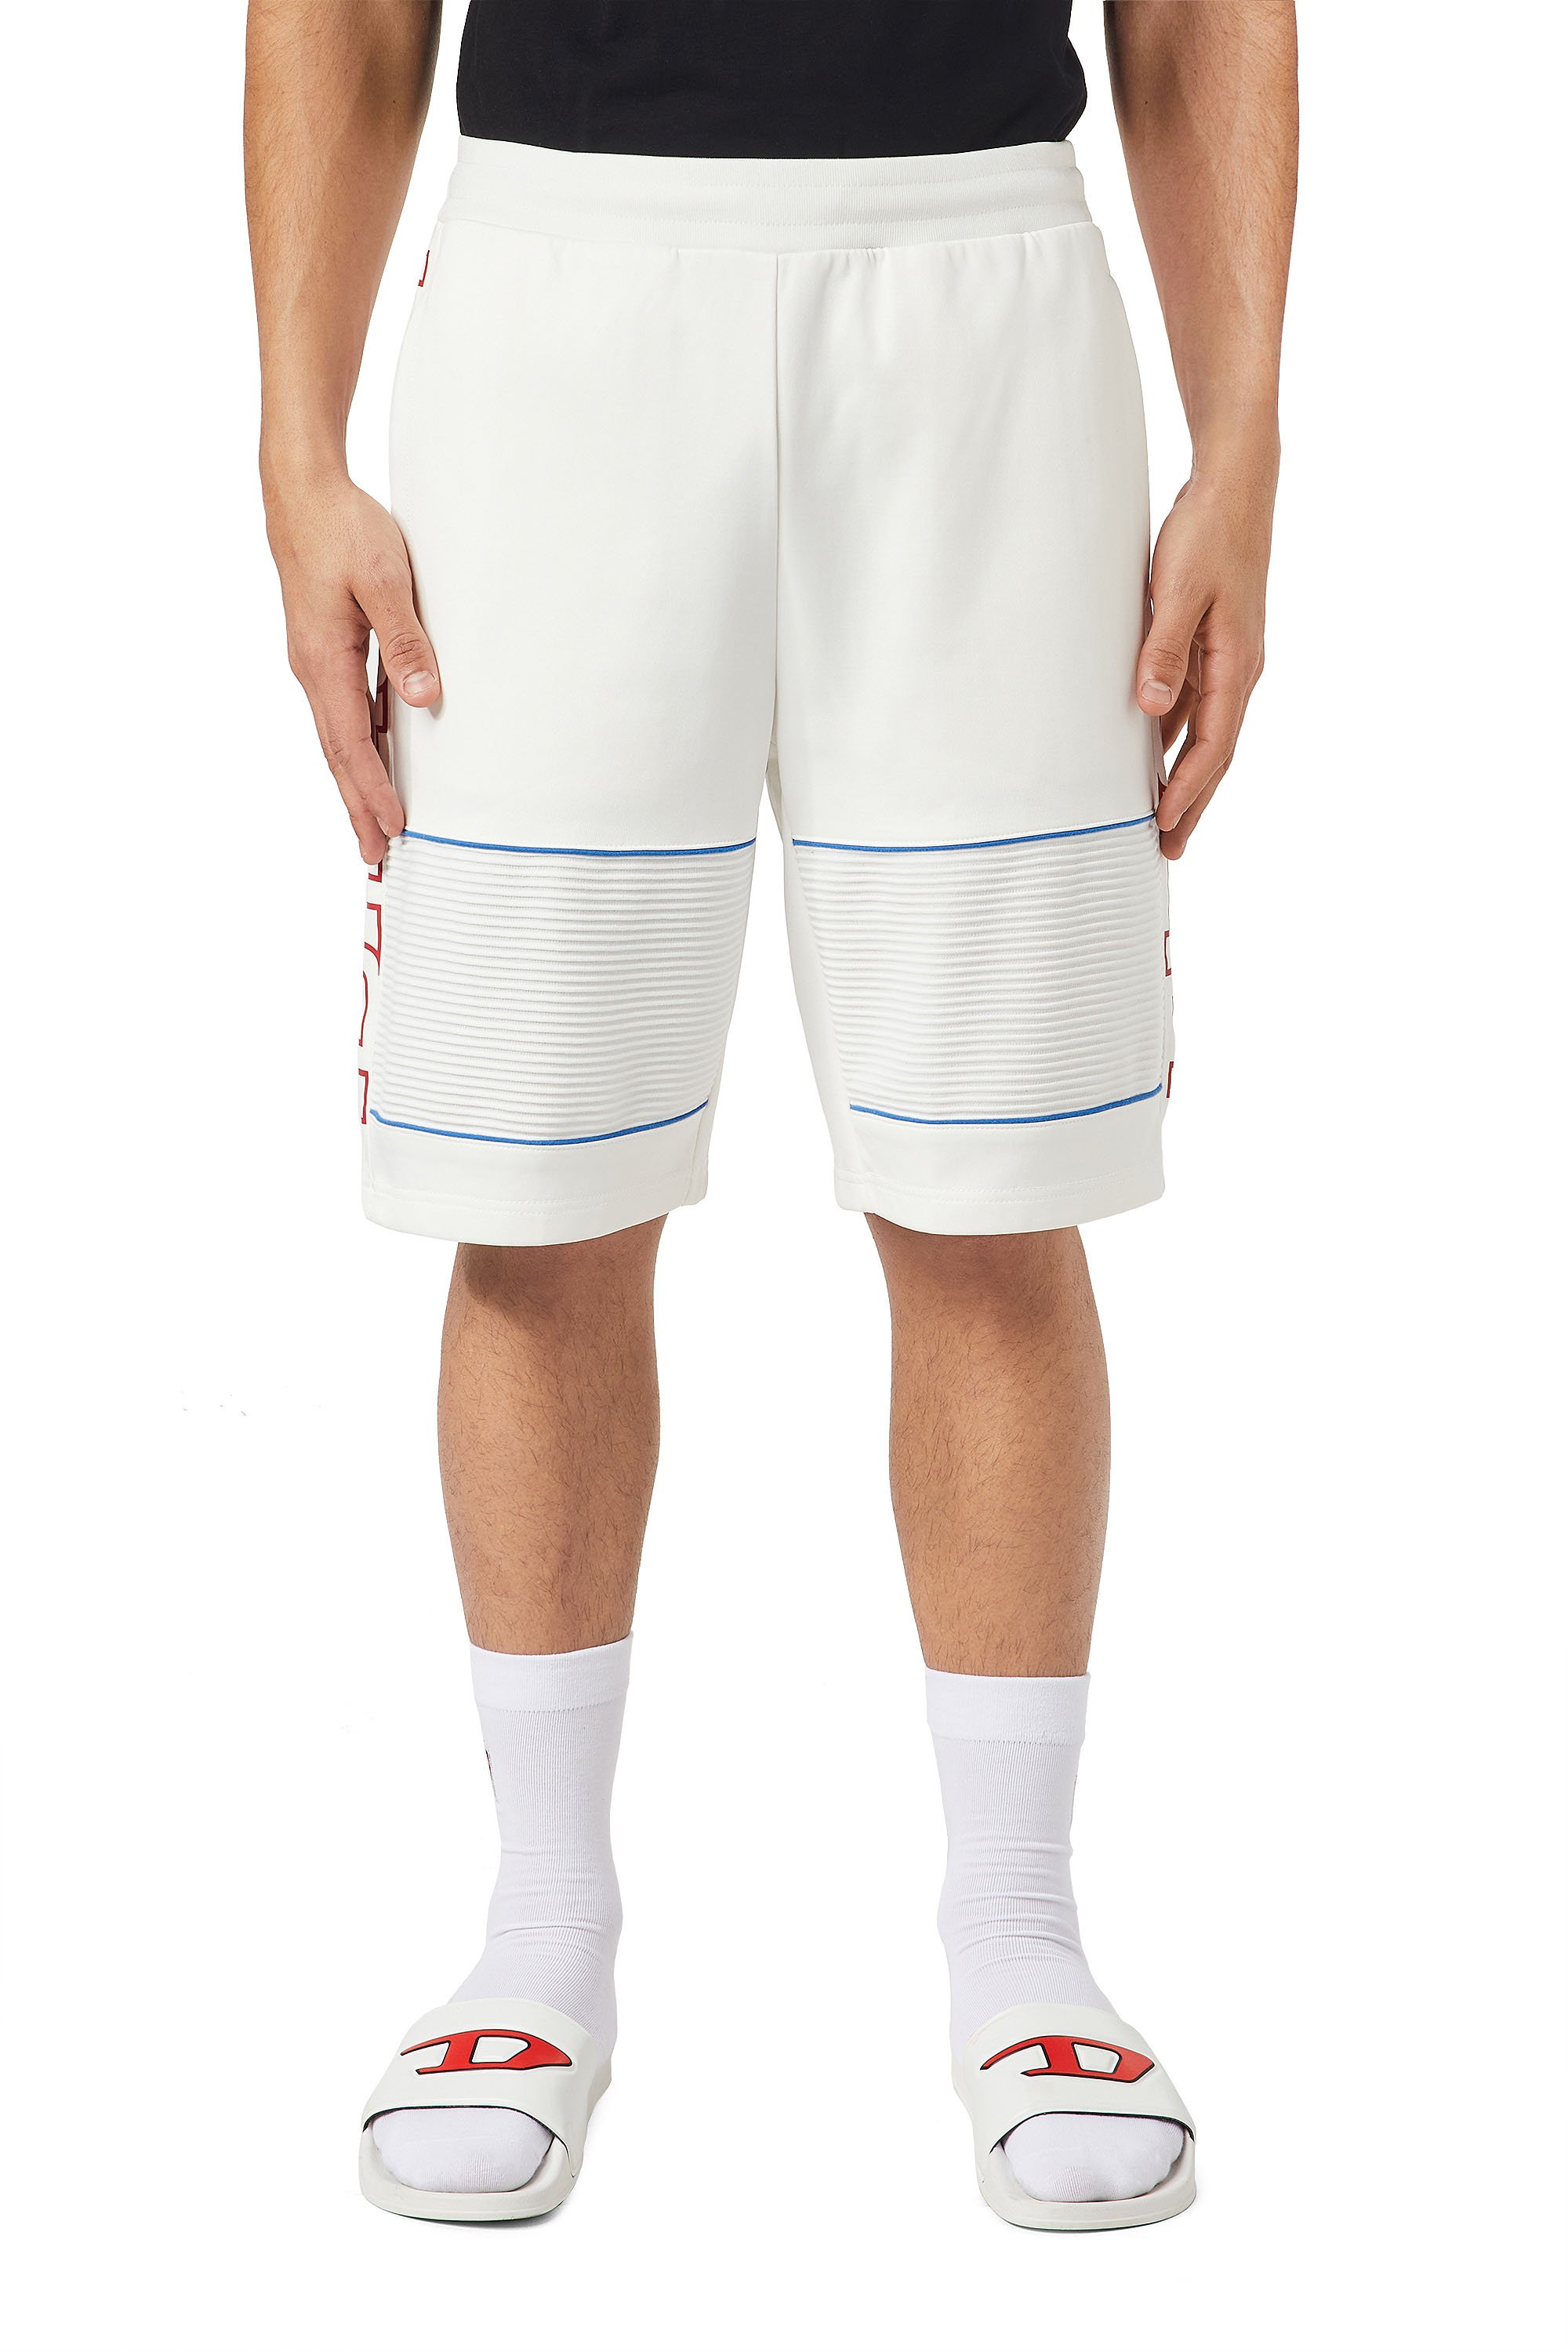 Box 92 REVERSIBLE   Basketball Shorts Blue-White By Starting 5 FREE P & P 